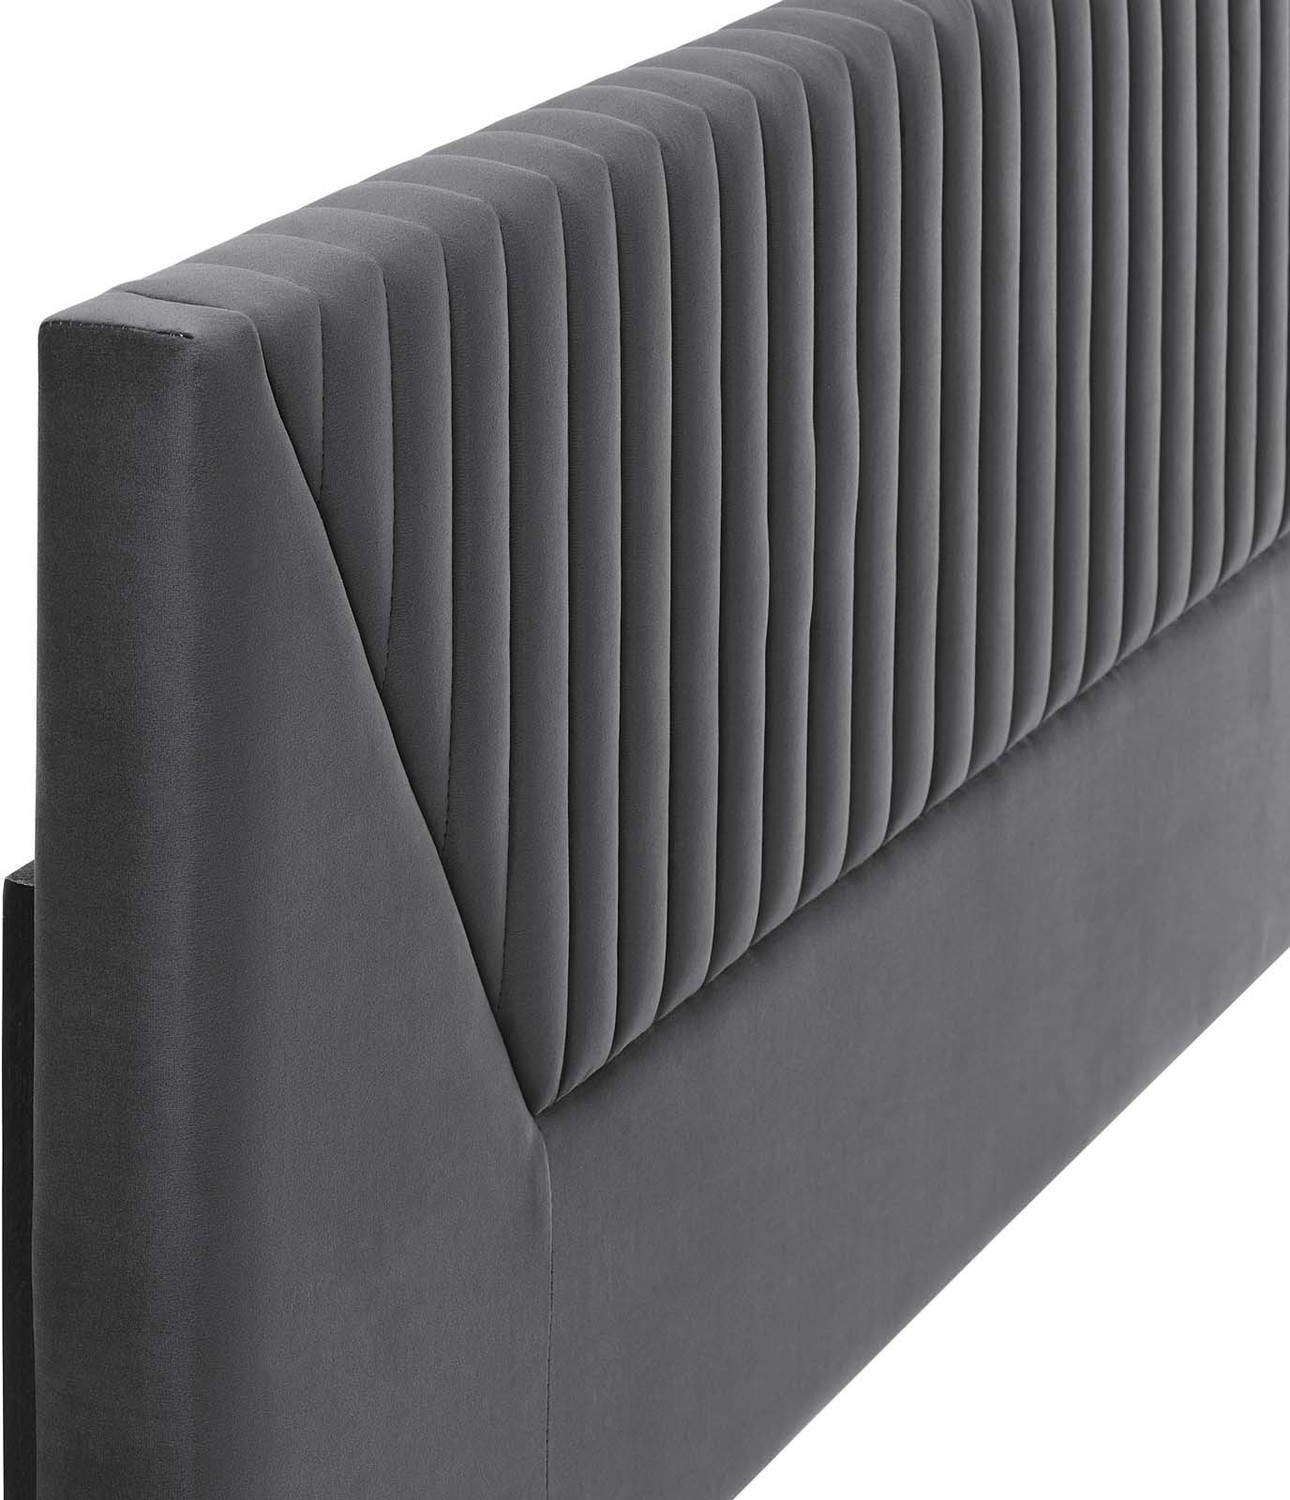 twin bed headboard ideas Modway Furniture Headboards Charcoal